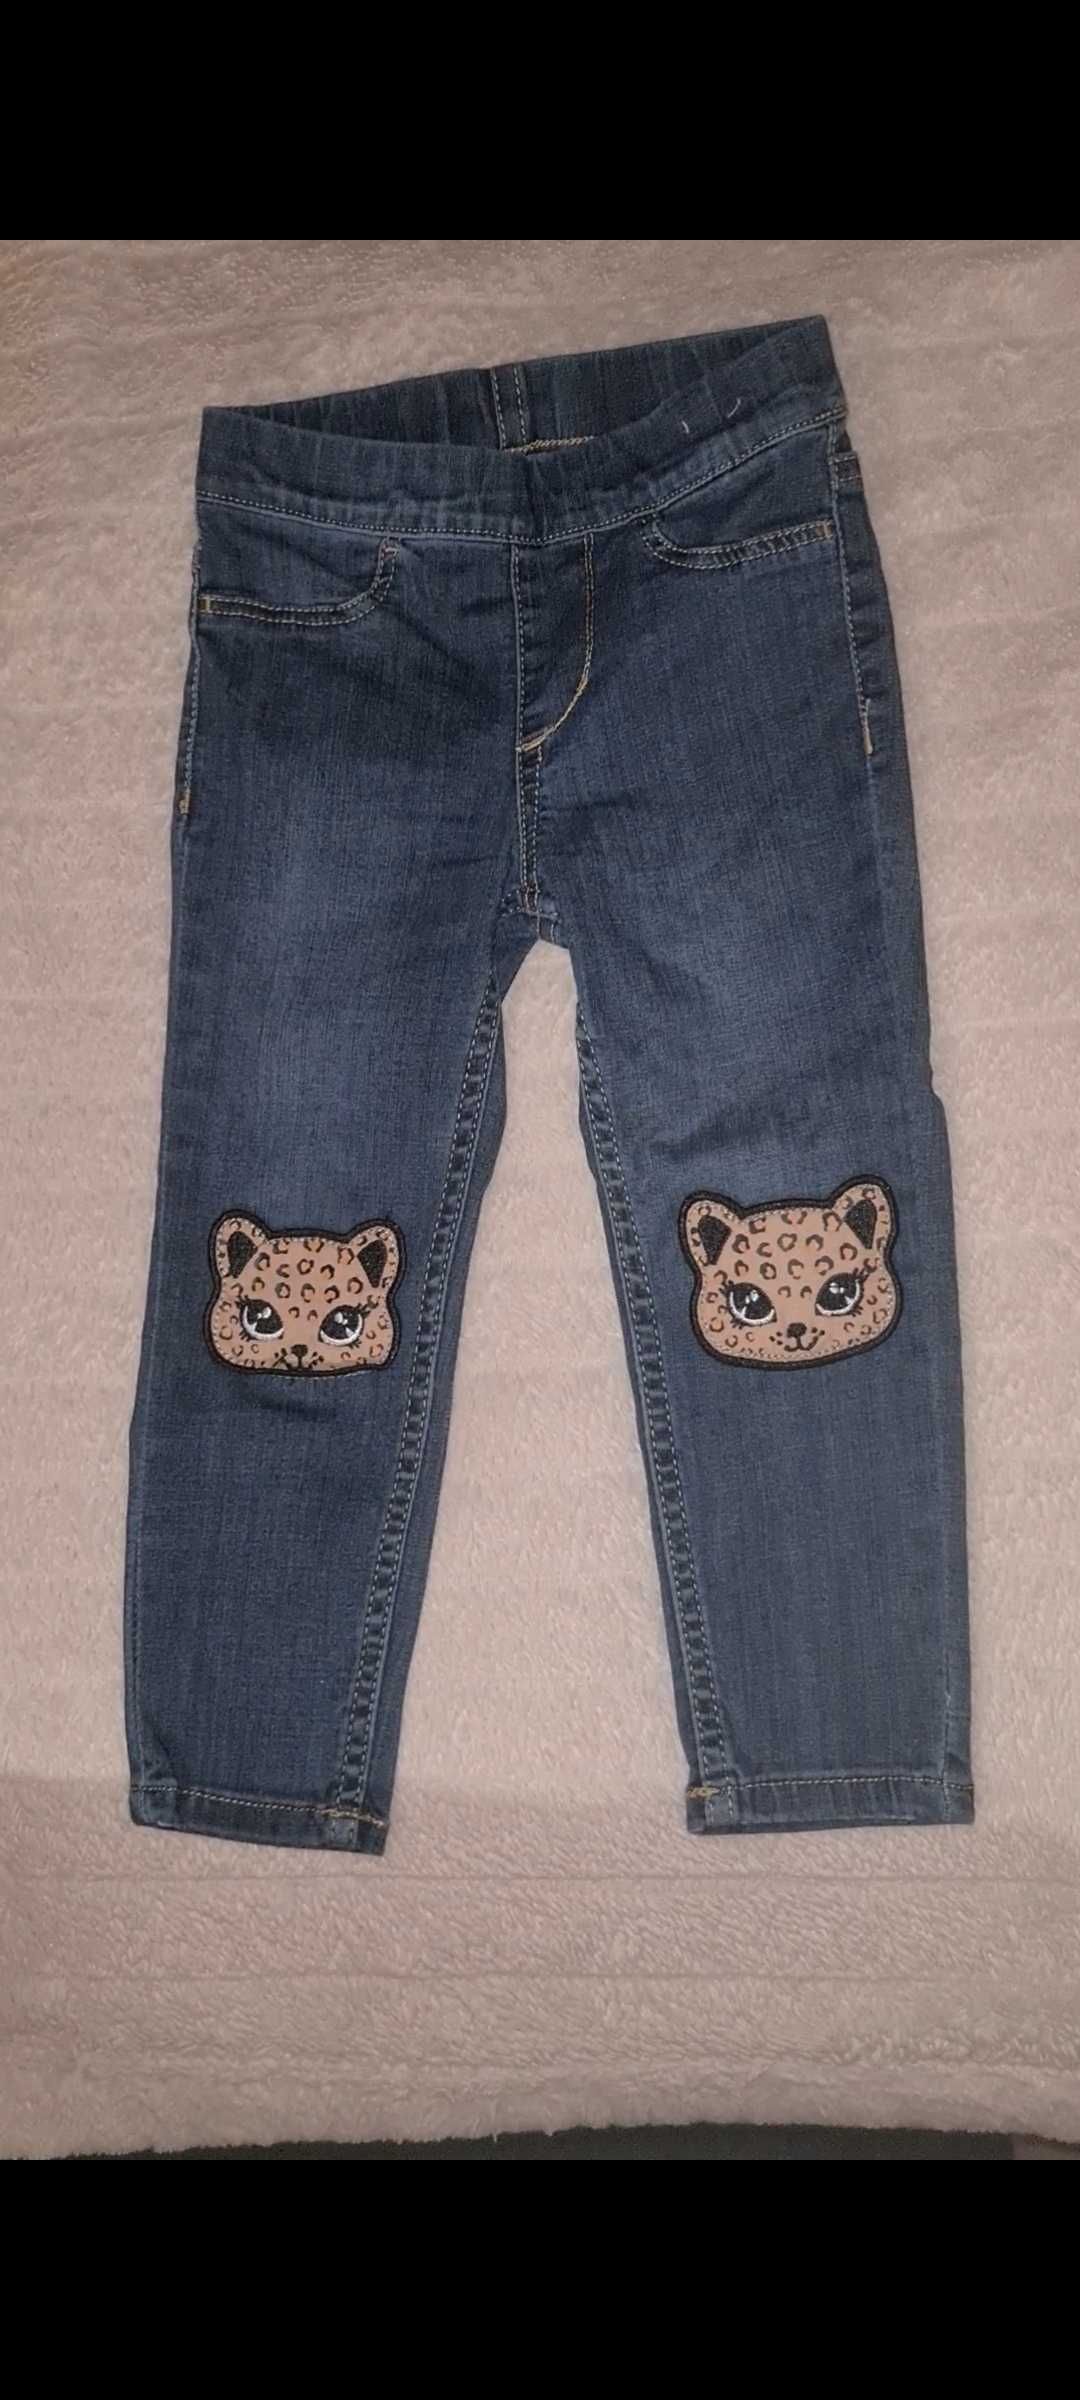 Pantaloni blugi jeans subtiri fata H&M albastri cu pisici 2/3 ani noi